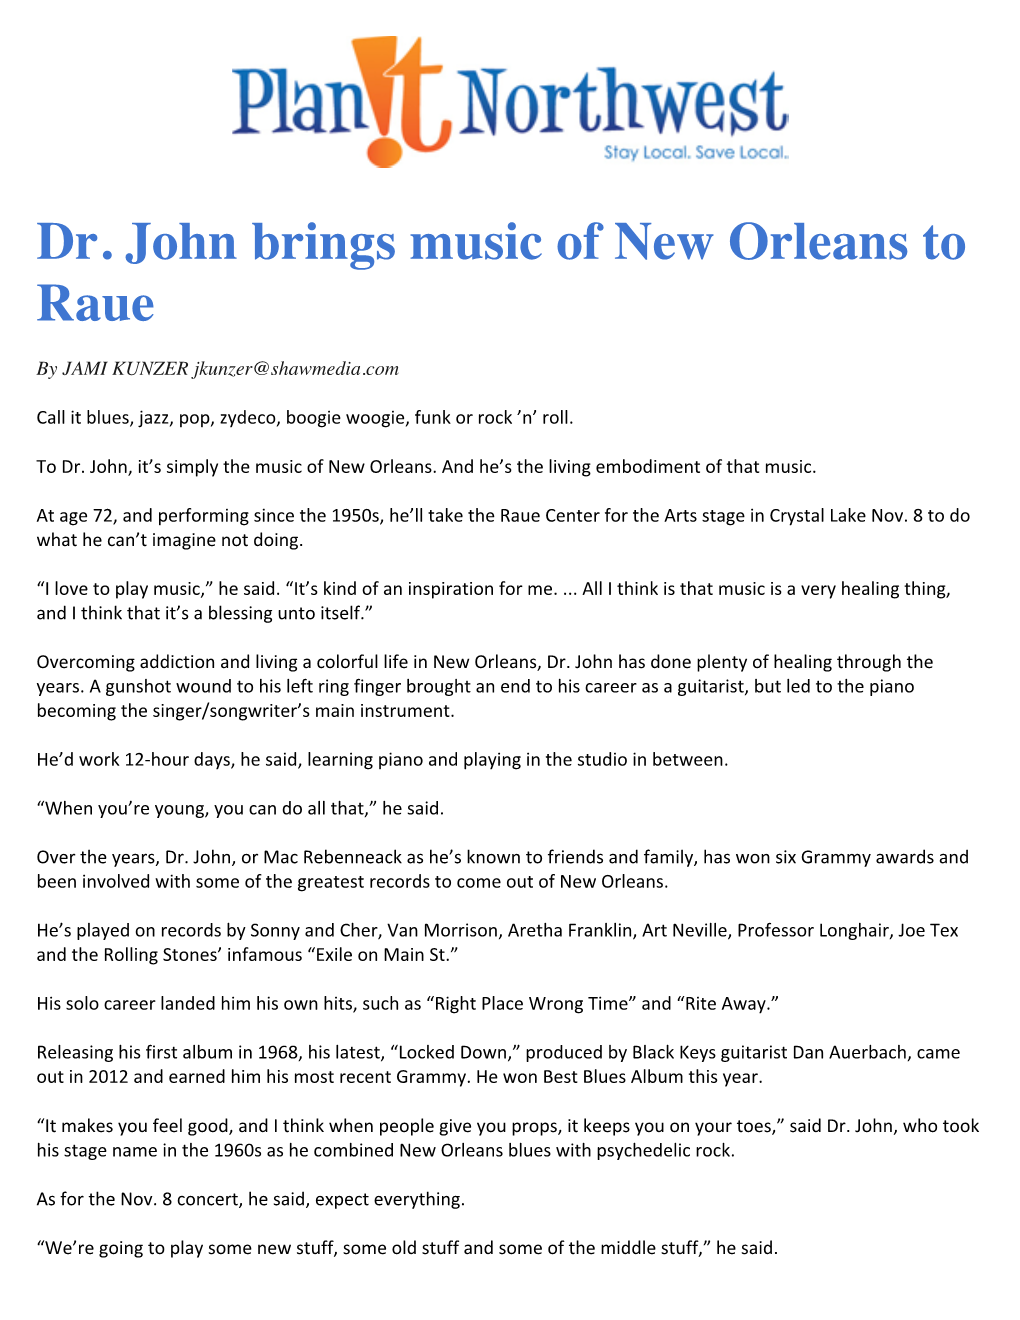 Dr. John Brings Music of New Orleans to Raue